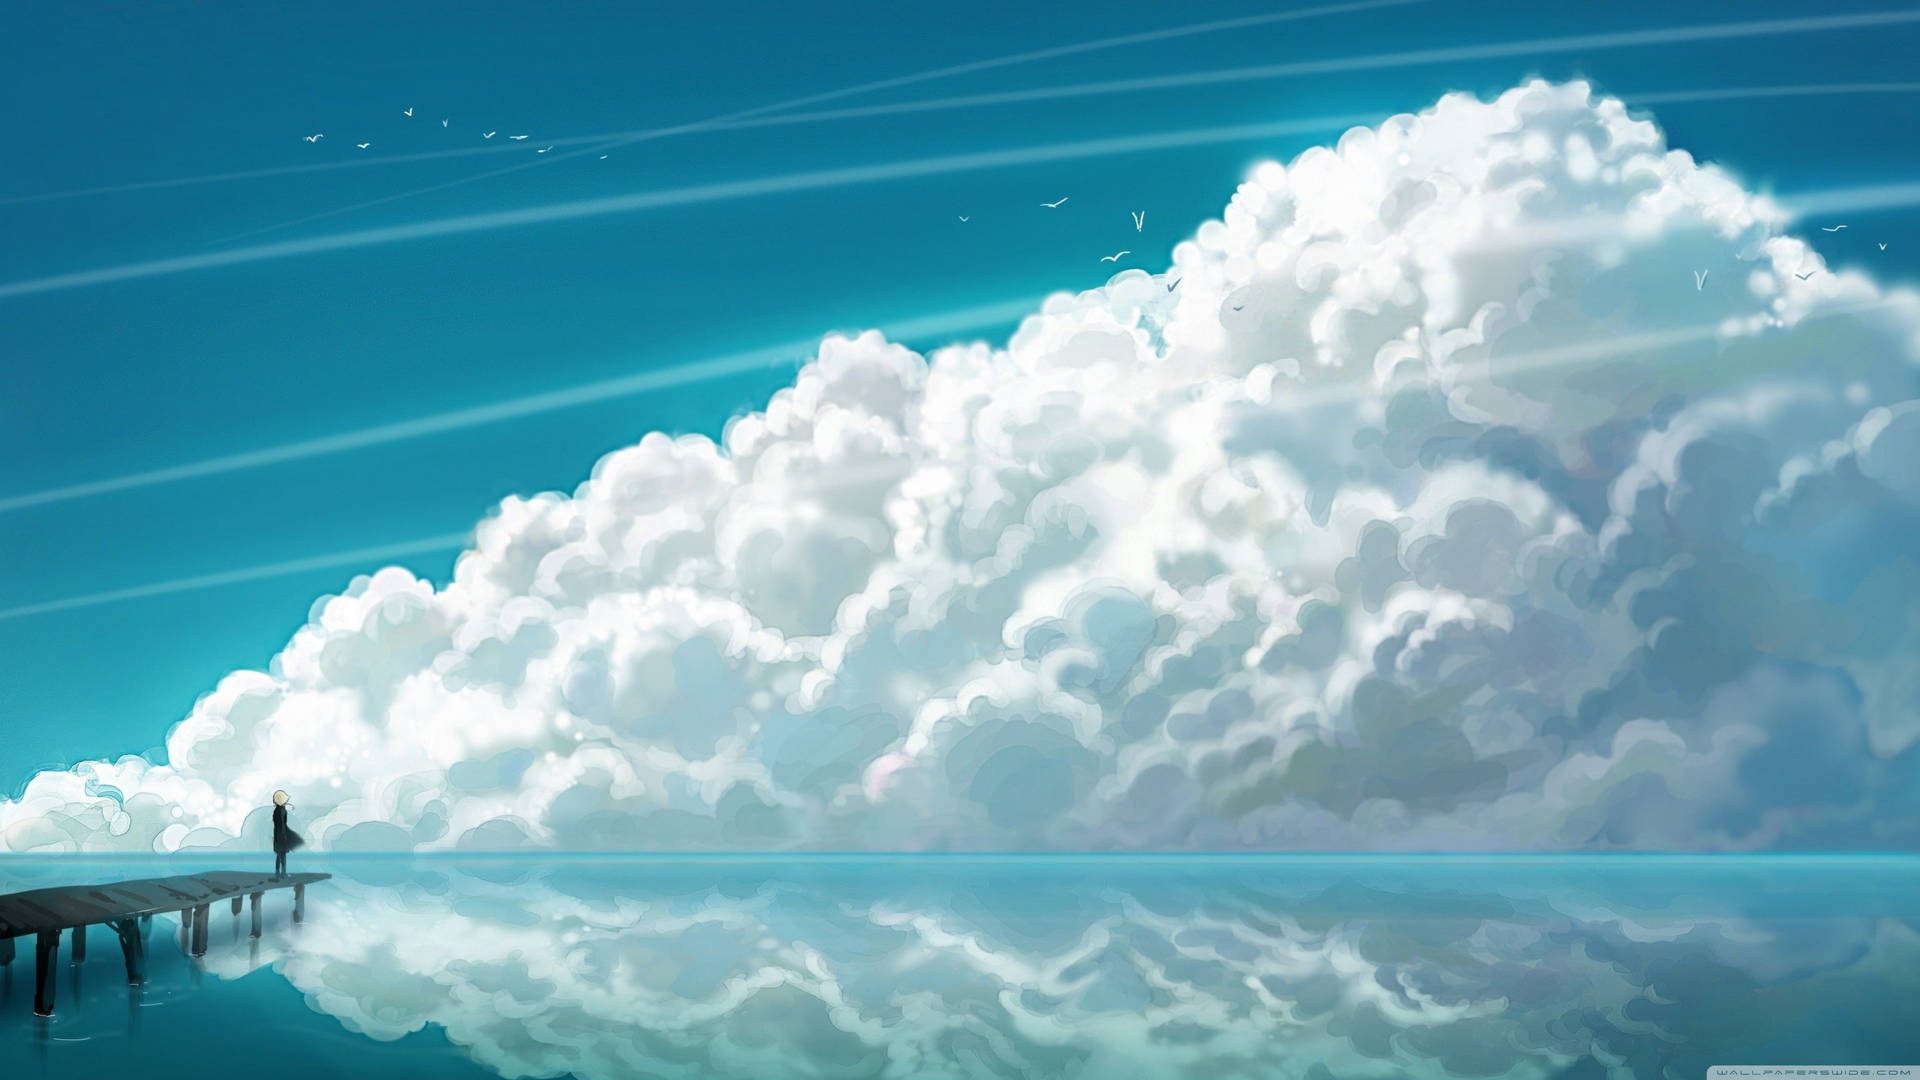 Aesthetic Cloud Wallpaper